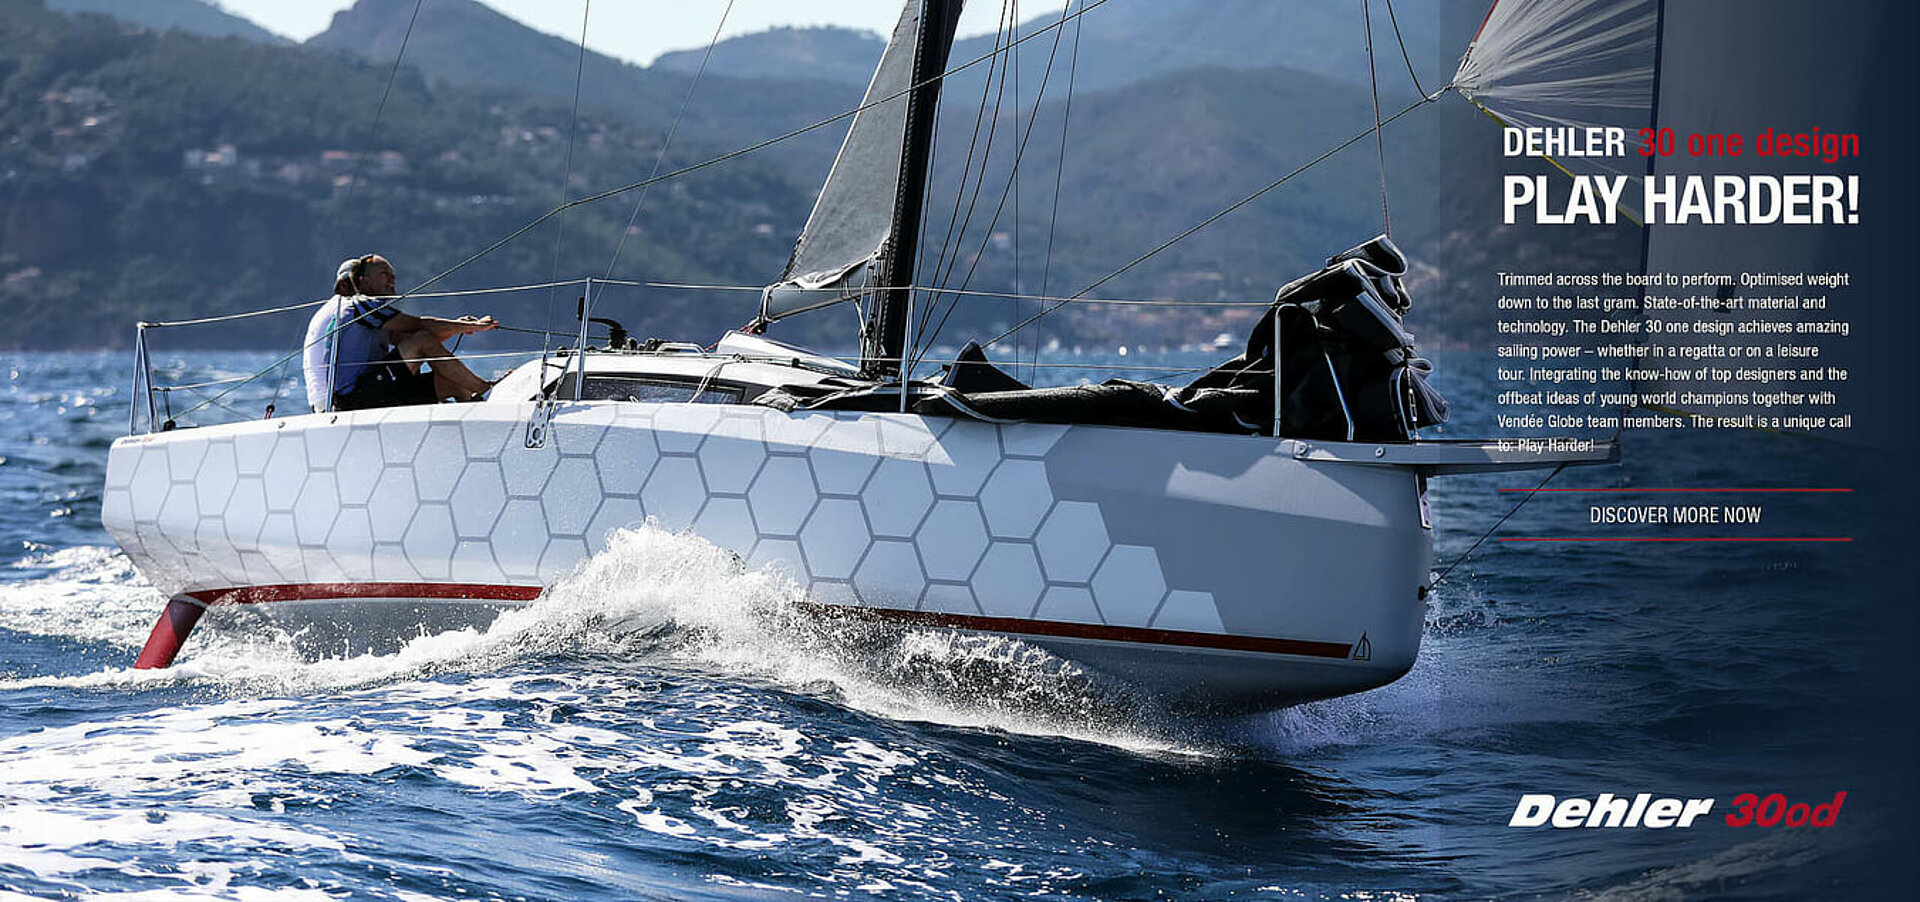 Dehler 30 one设计的高性能帆船，专为帆船比赛而生。